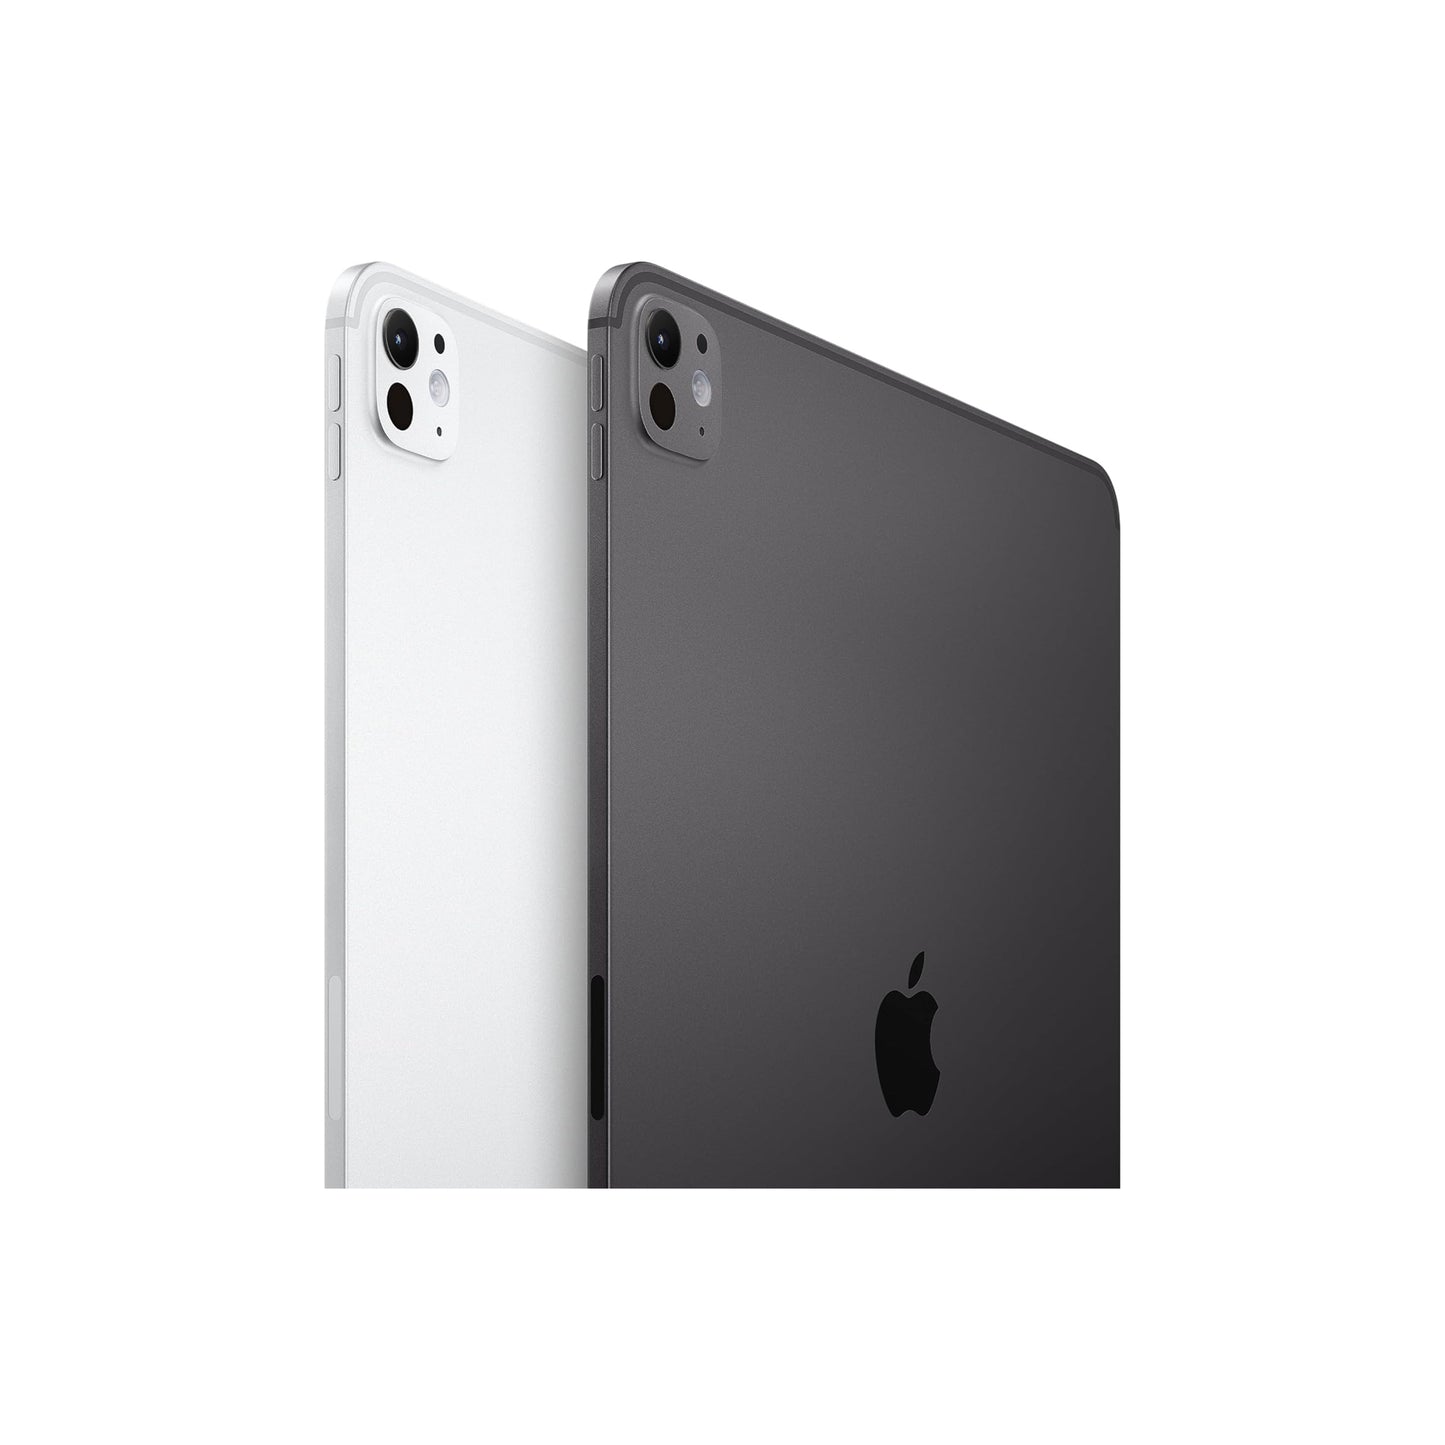 Apple iPad Pro 11 بوصة (M4): شاشة Ultra Retina XDR - زجاج نانو، 1 تيرابايت، كاميرا أمامية 12 ميجابكسل / كاميرا خلفية 12 ميجابكسل، ماسح ضوئي LiDAR، Wi-Fi 6E + 5G خلوي مع eSIM، معرف الوجه - أسود فلكي